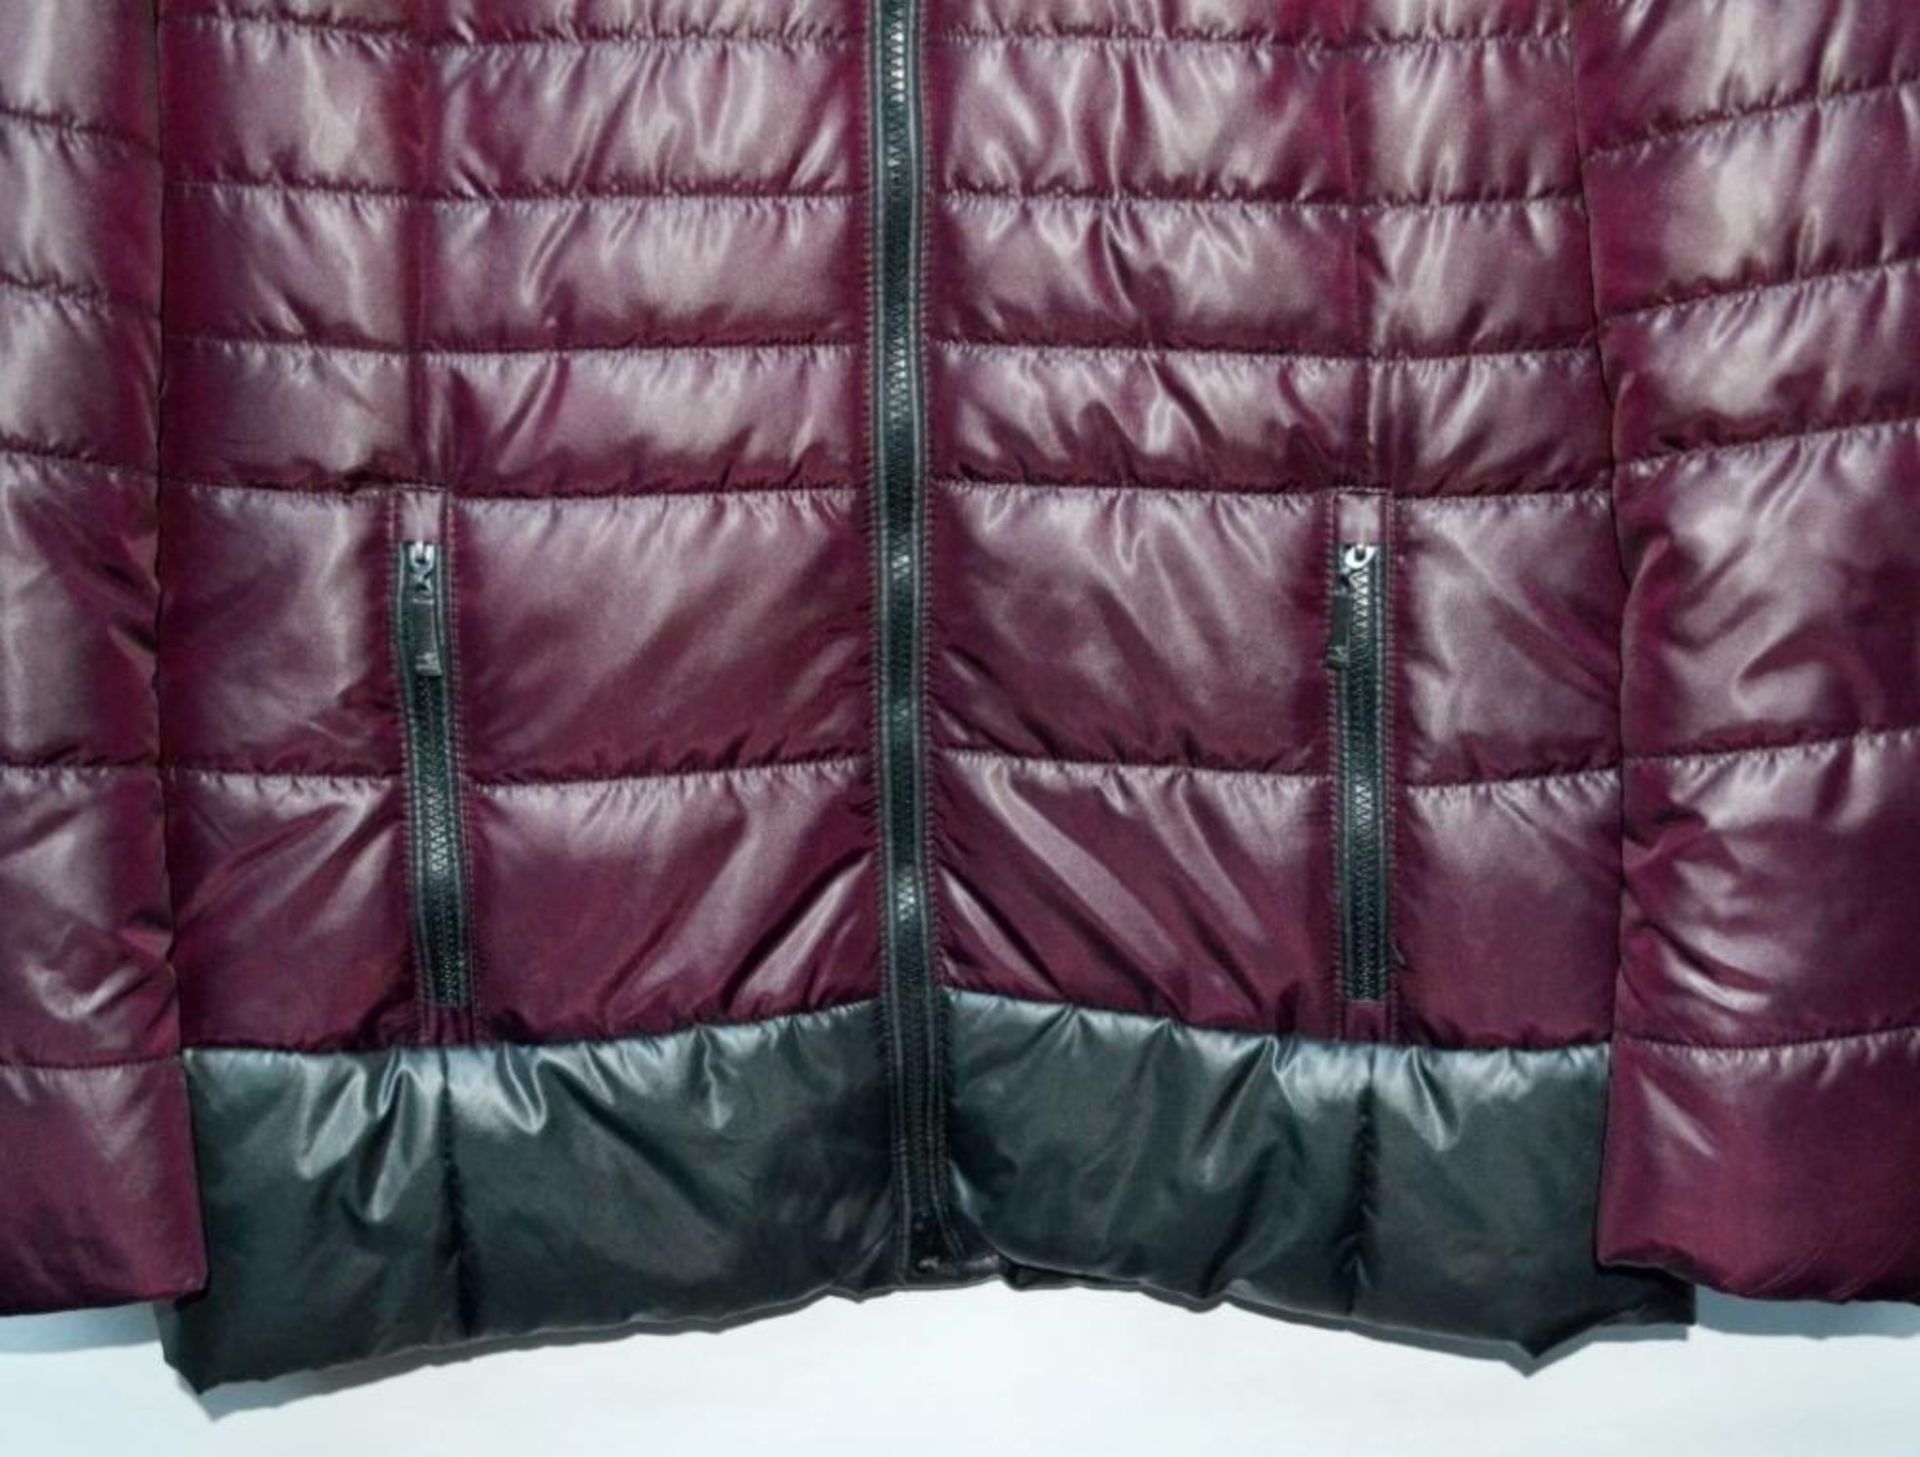 1 x Premium Branded Womens Winter Coat - Wind Proof & Water Resistant - Colour: Dark Plum - UK Size - Image 4 of 7